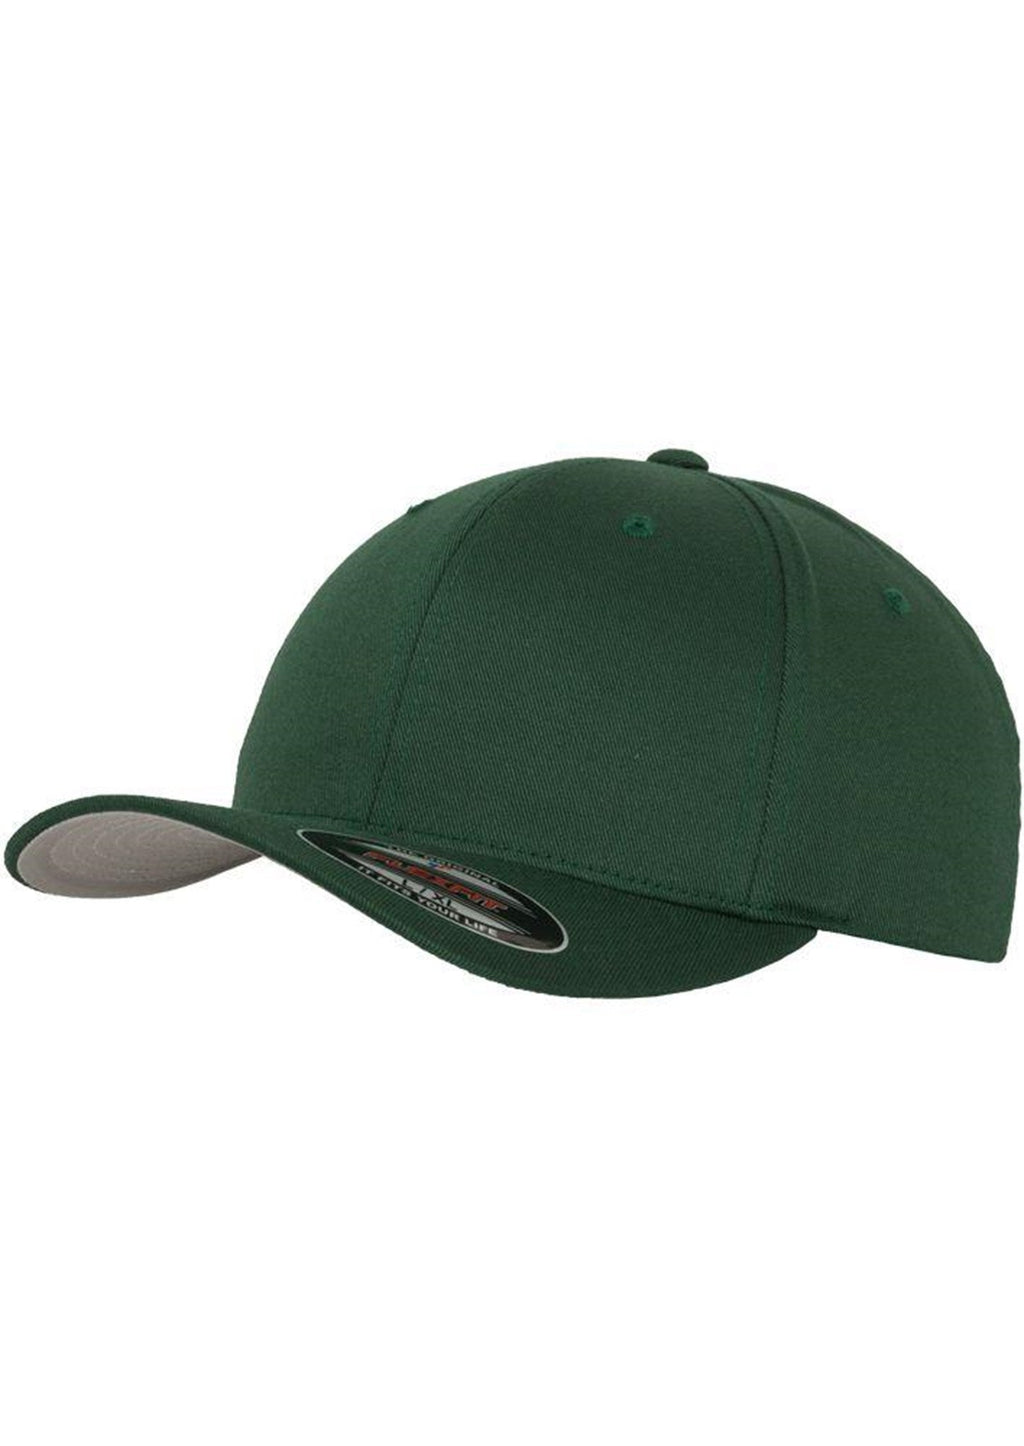 FlexFit原始棒球帽 - 深绿色